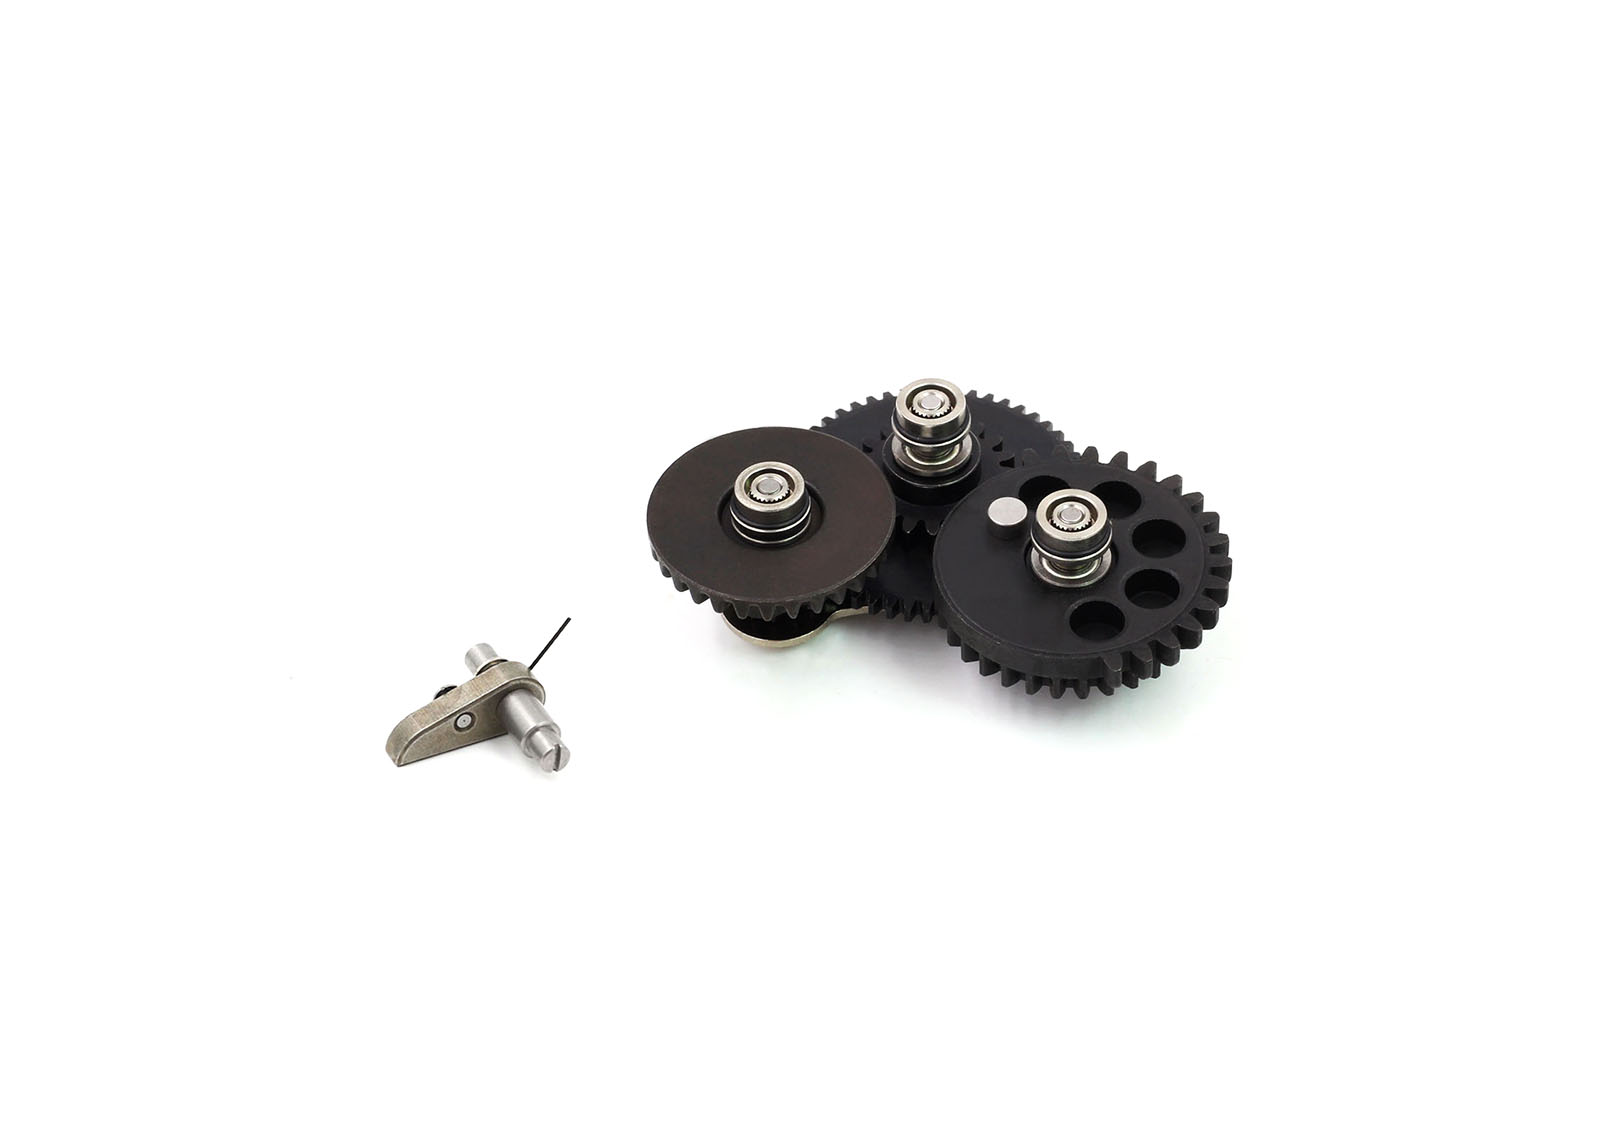 Modular Gear Set - SMOOTH 6mm Ver.2/Ver.3 (Torque 21.6:1) - Modify Airsoft parts